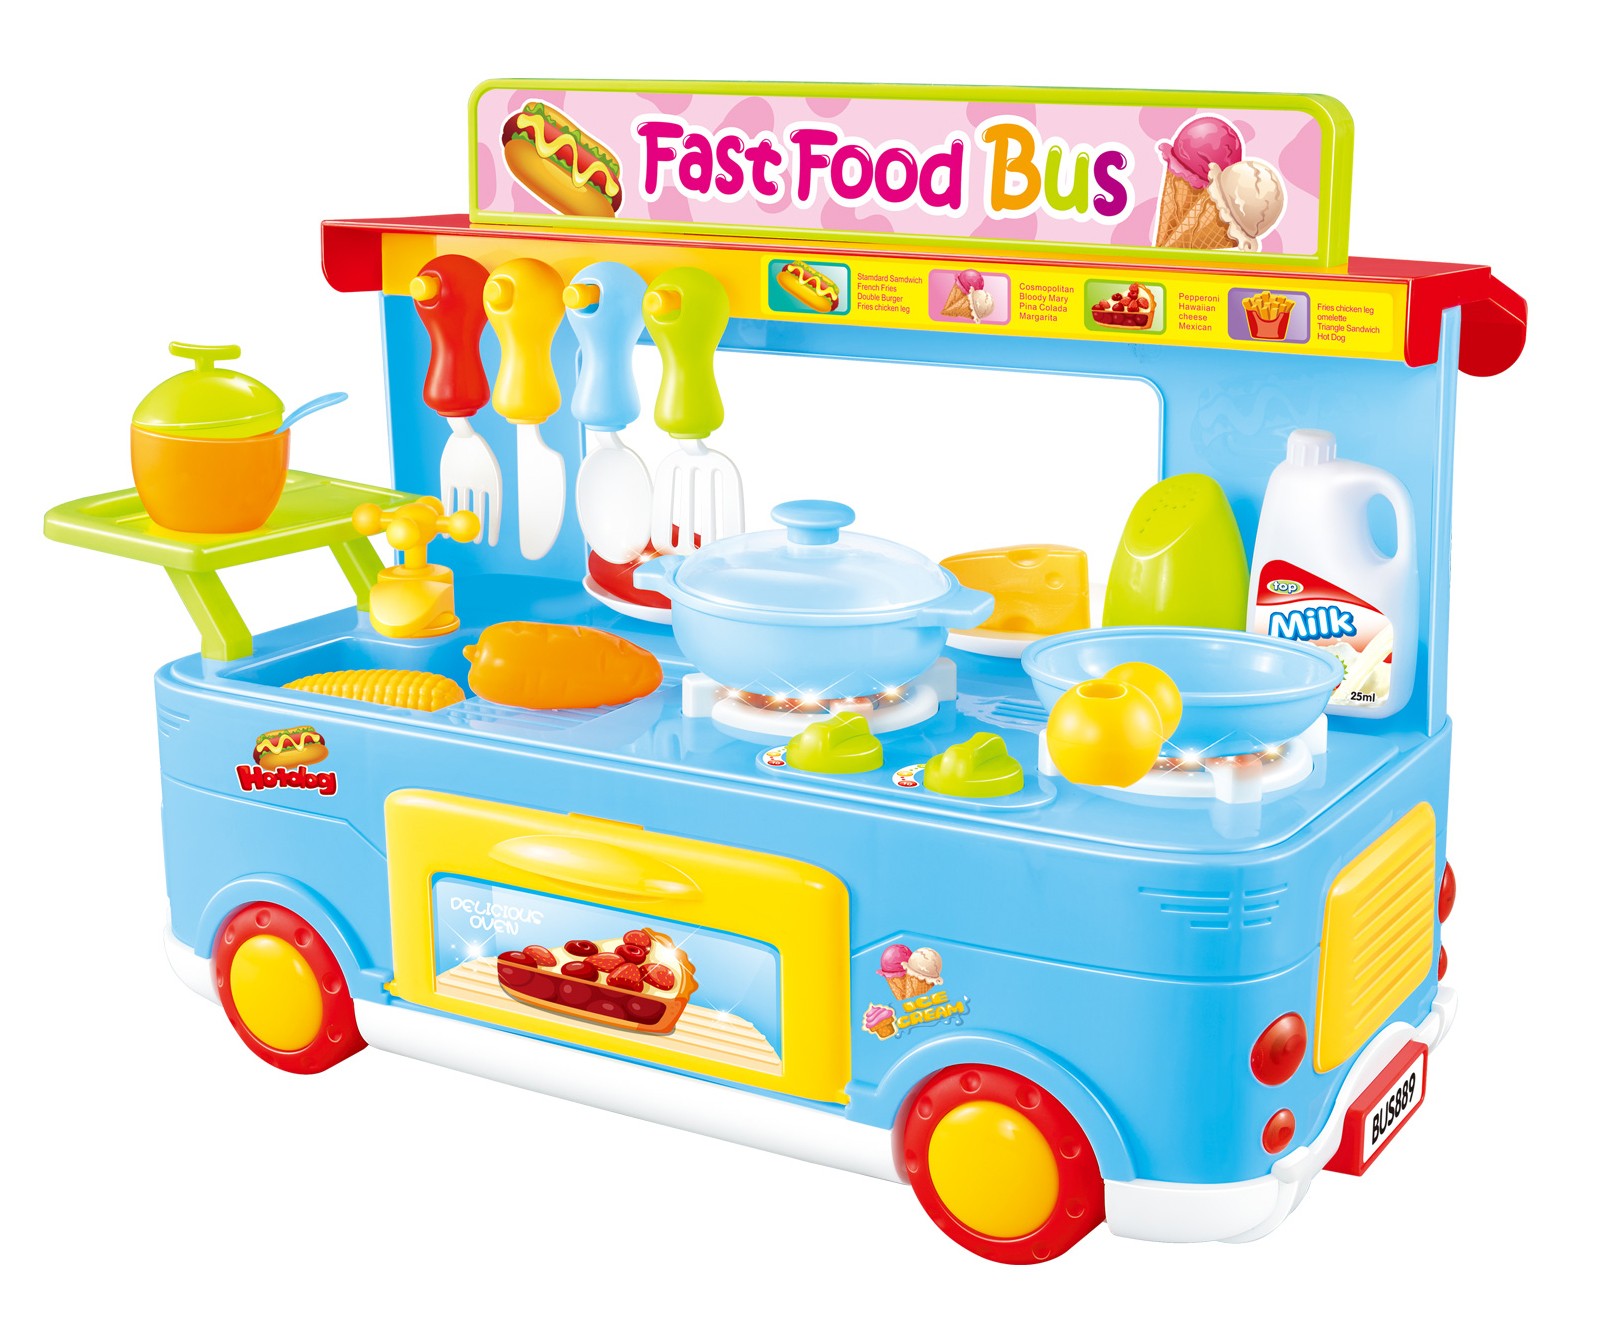 Fast Food Bus Kitchen Play Set Toy 29pcs (Blue)  